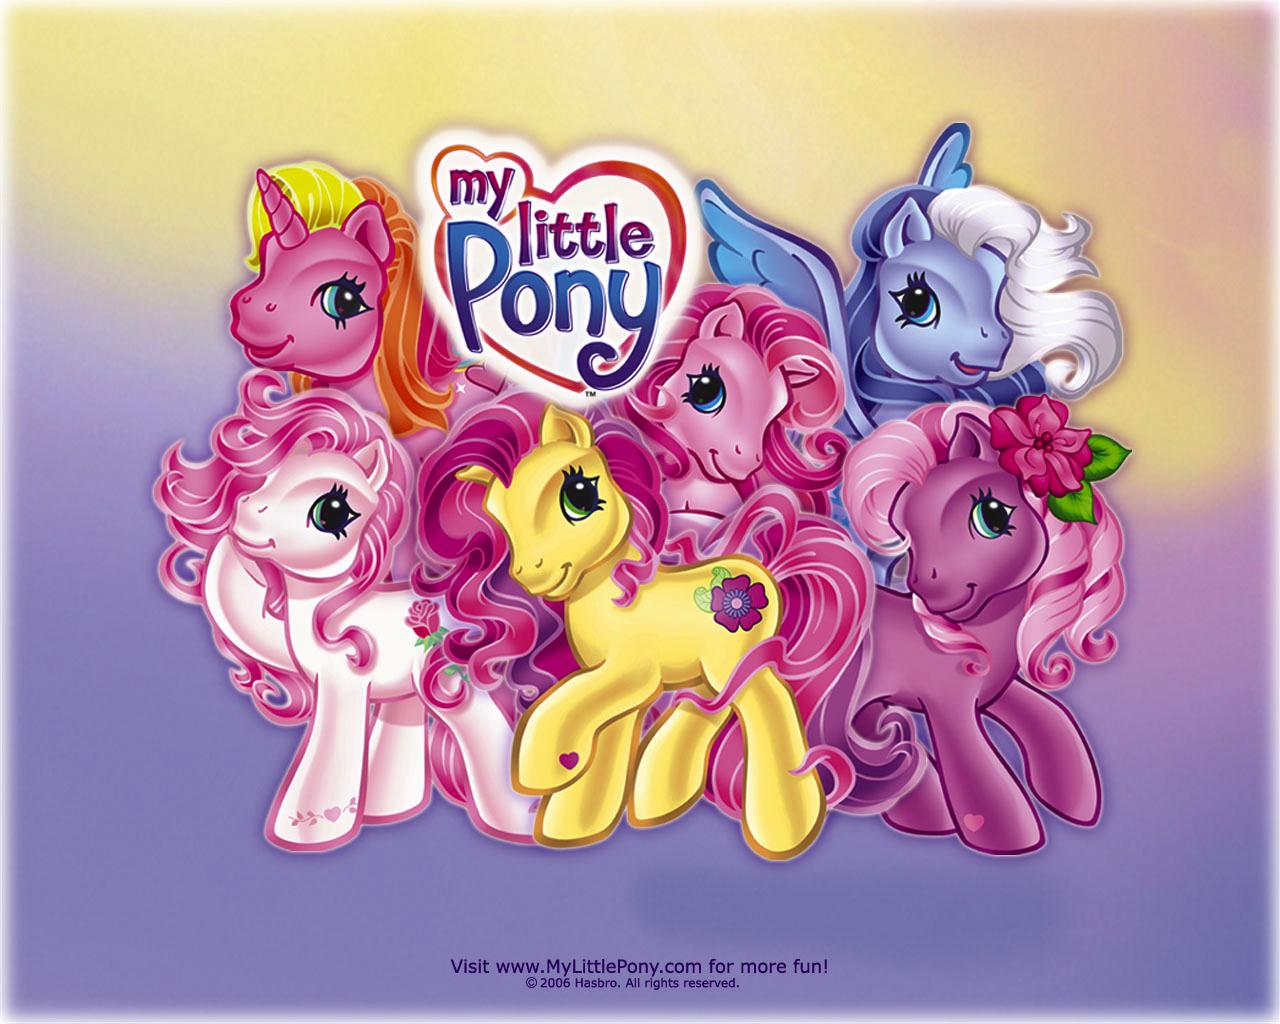 My-Little-Pony-my-little-pony-256752_1280_1024.jpg